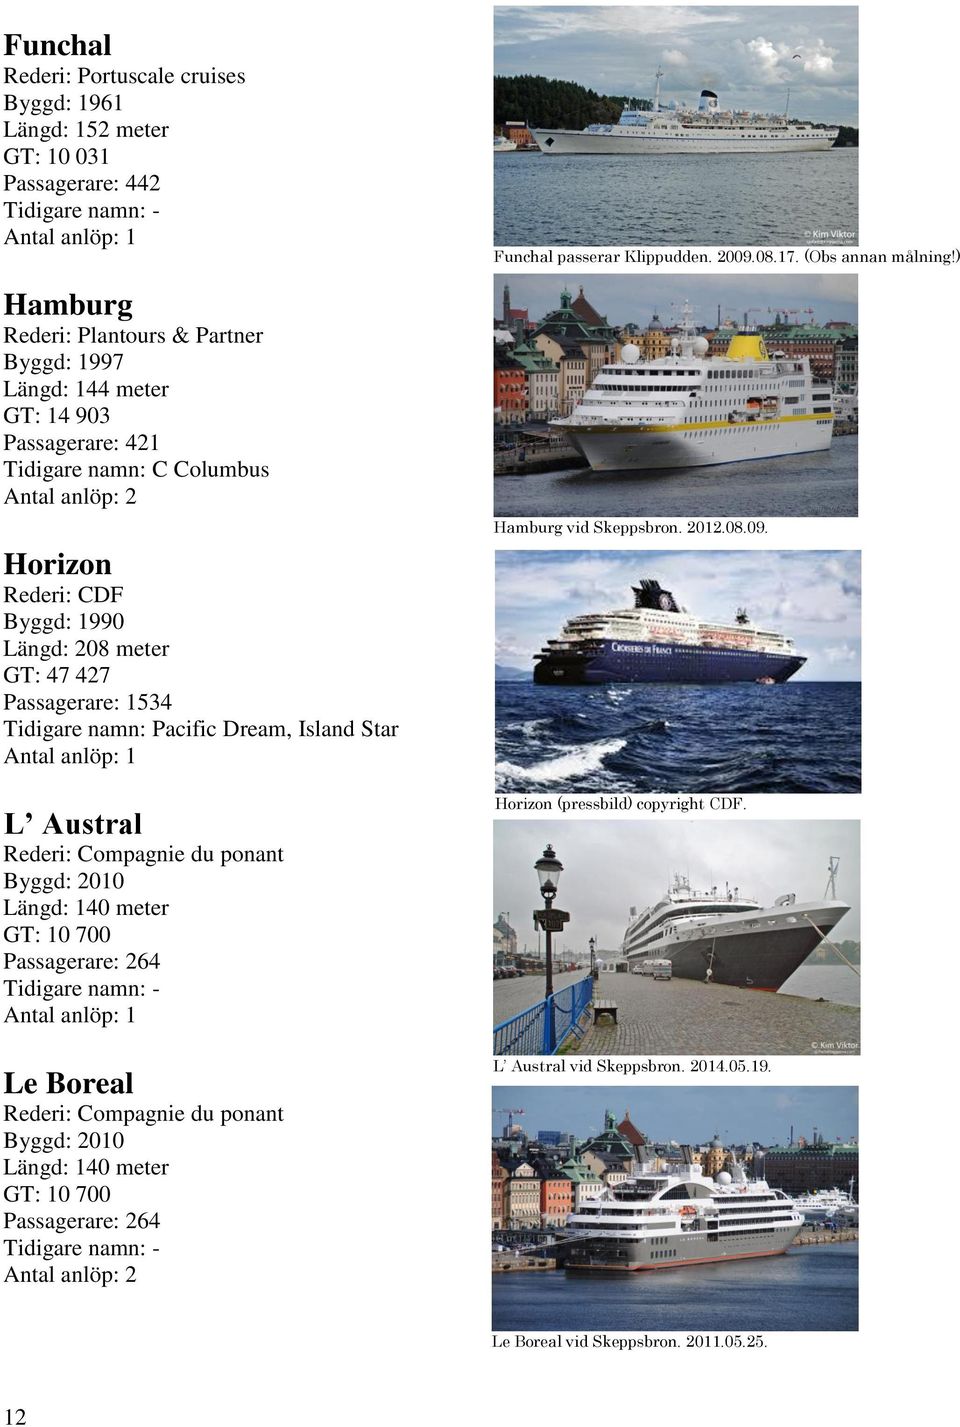 ponant Byggd: 2010 Längd: 140 meter GT: 10 700 Passagerare: 264 Le Boreal Rederi: Compagnie du ponant Byggd: 2010 Längd: 140 meter GT: 10 700 Passagerare: 264 Funchal passerar